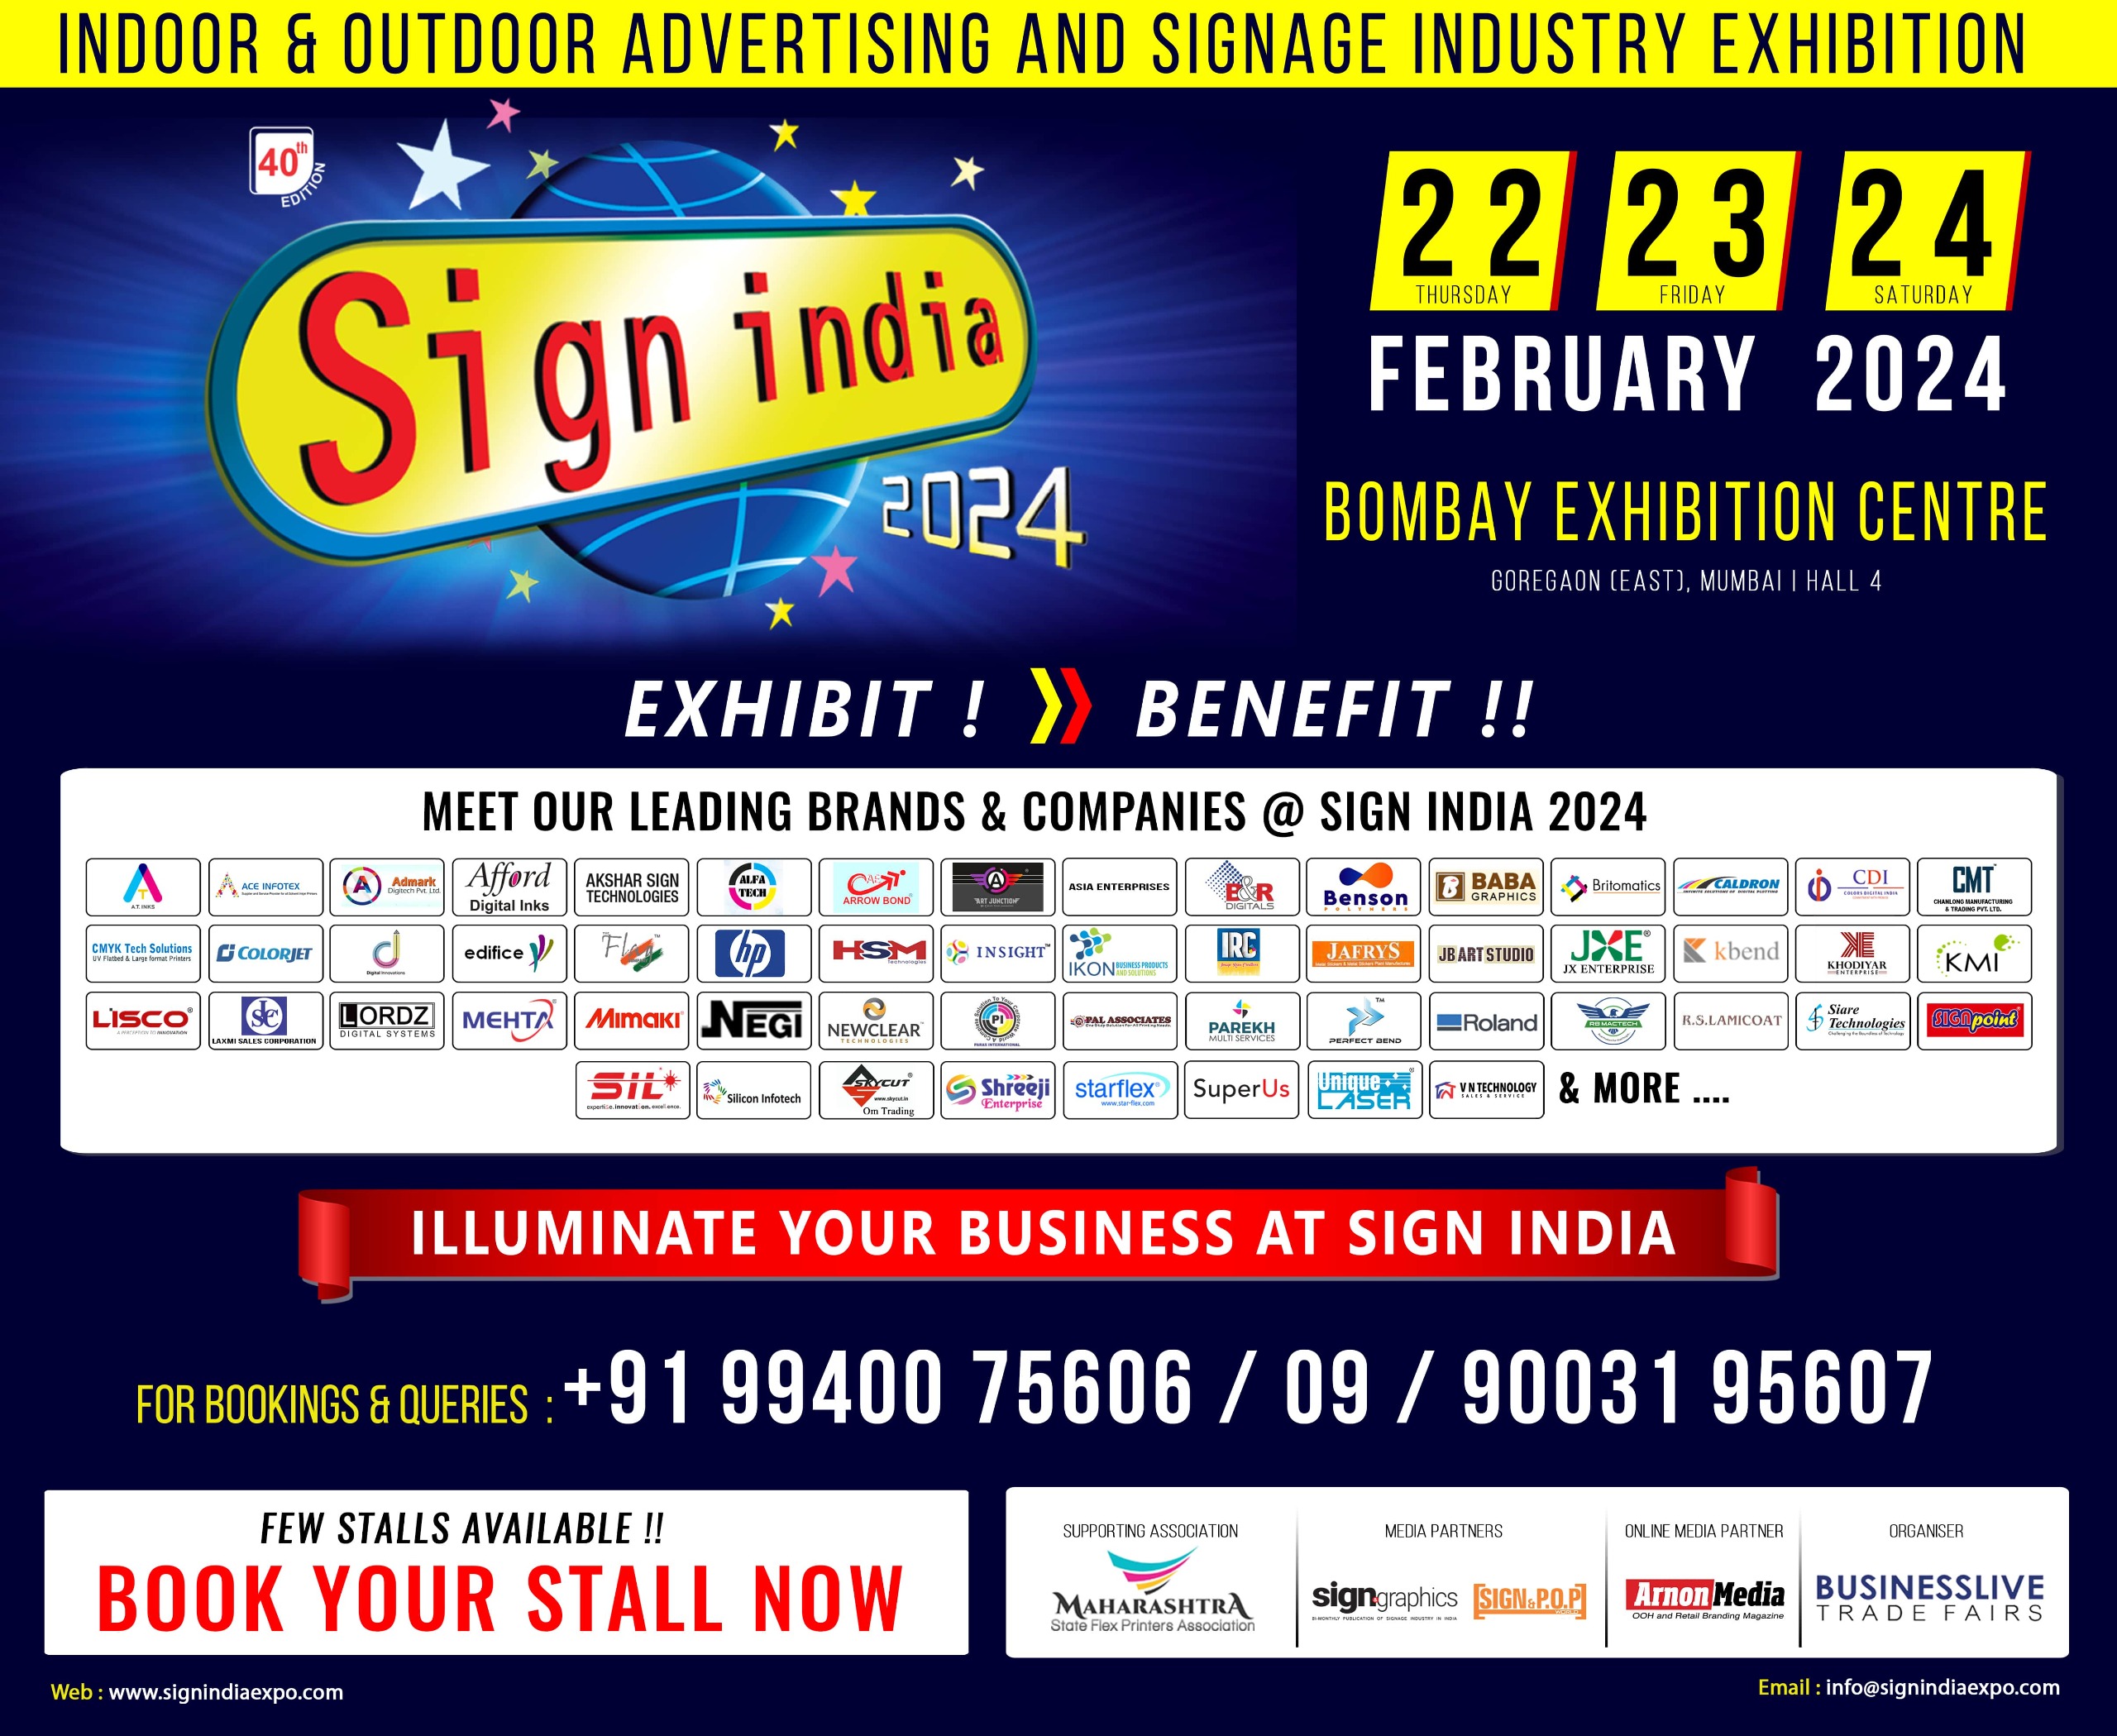 Arnon Media: The Official Online Media Partner for Sign India Expo 2024 in Mumbai